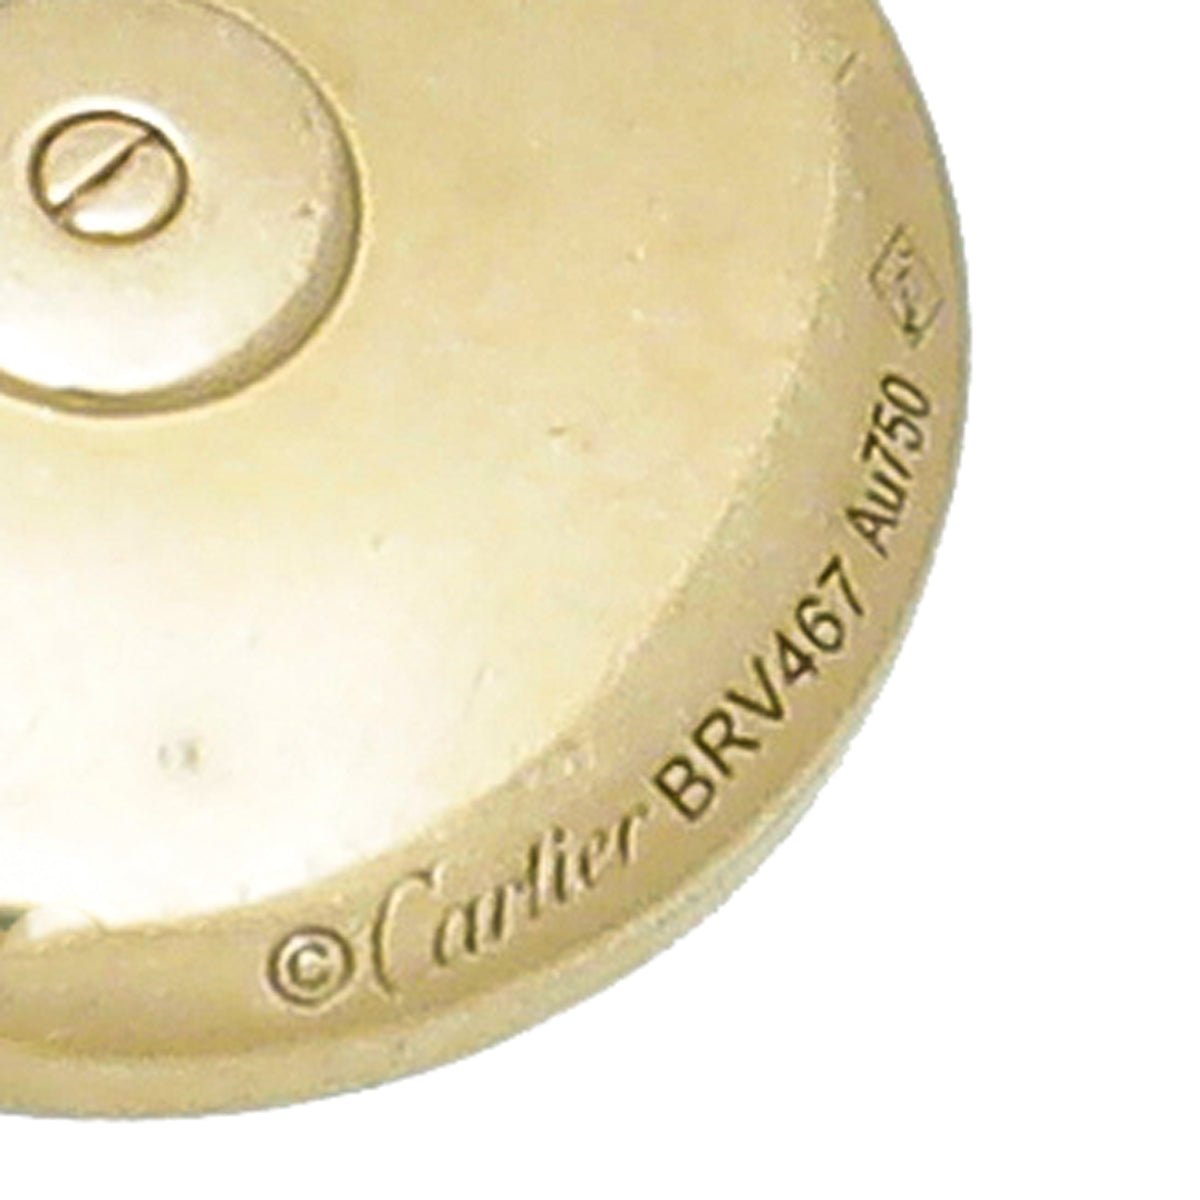 Cartier - Cartier 18K Yellow Gold Diamond MOP Amulette Small Necklace | The Closet